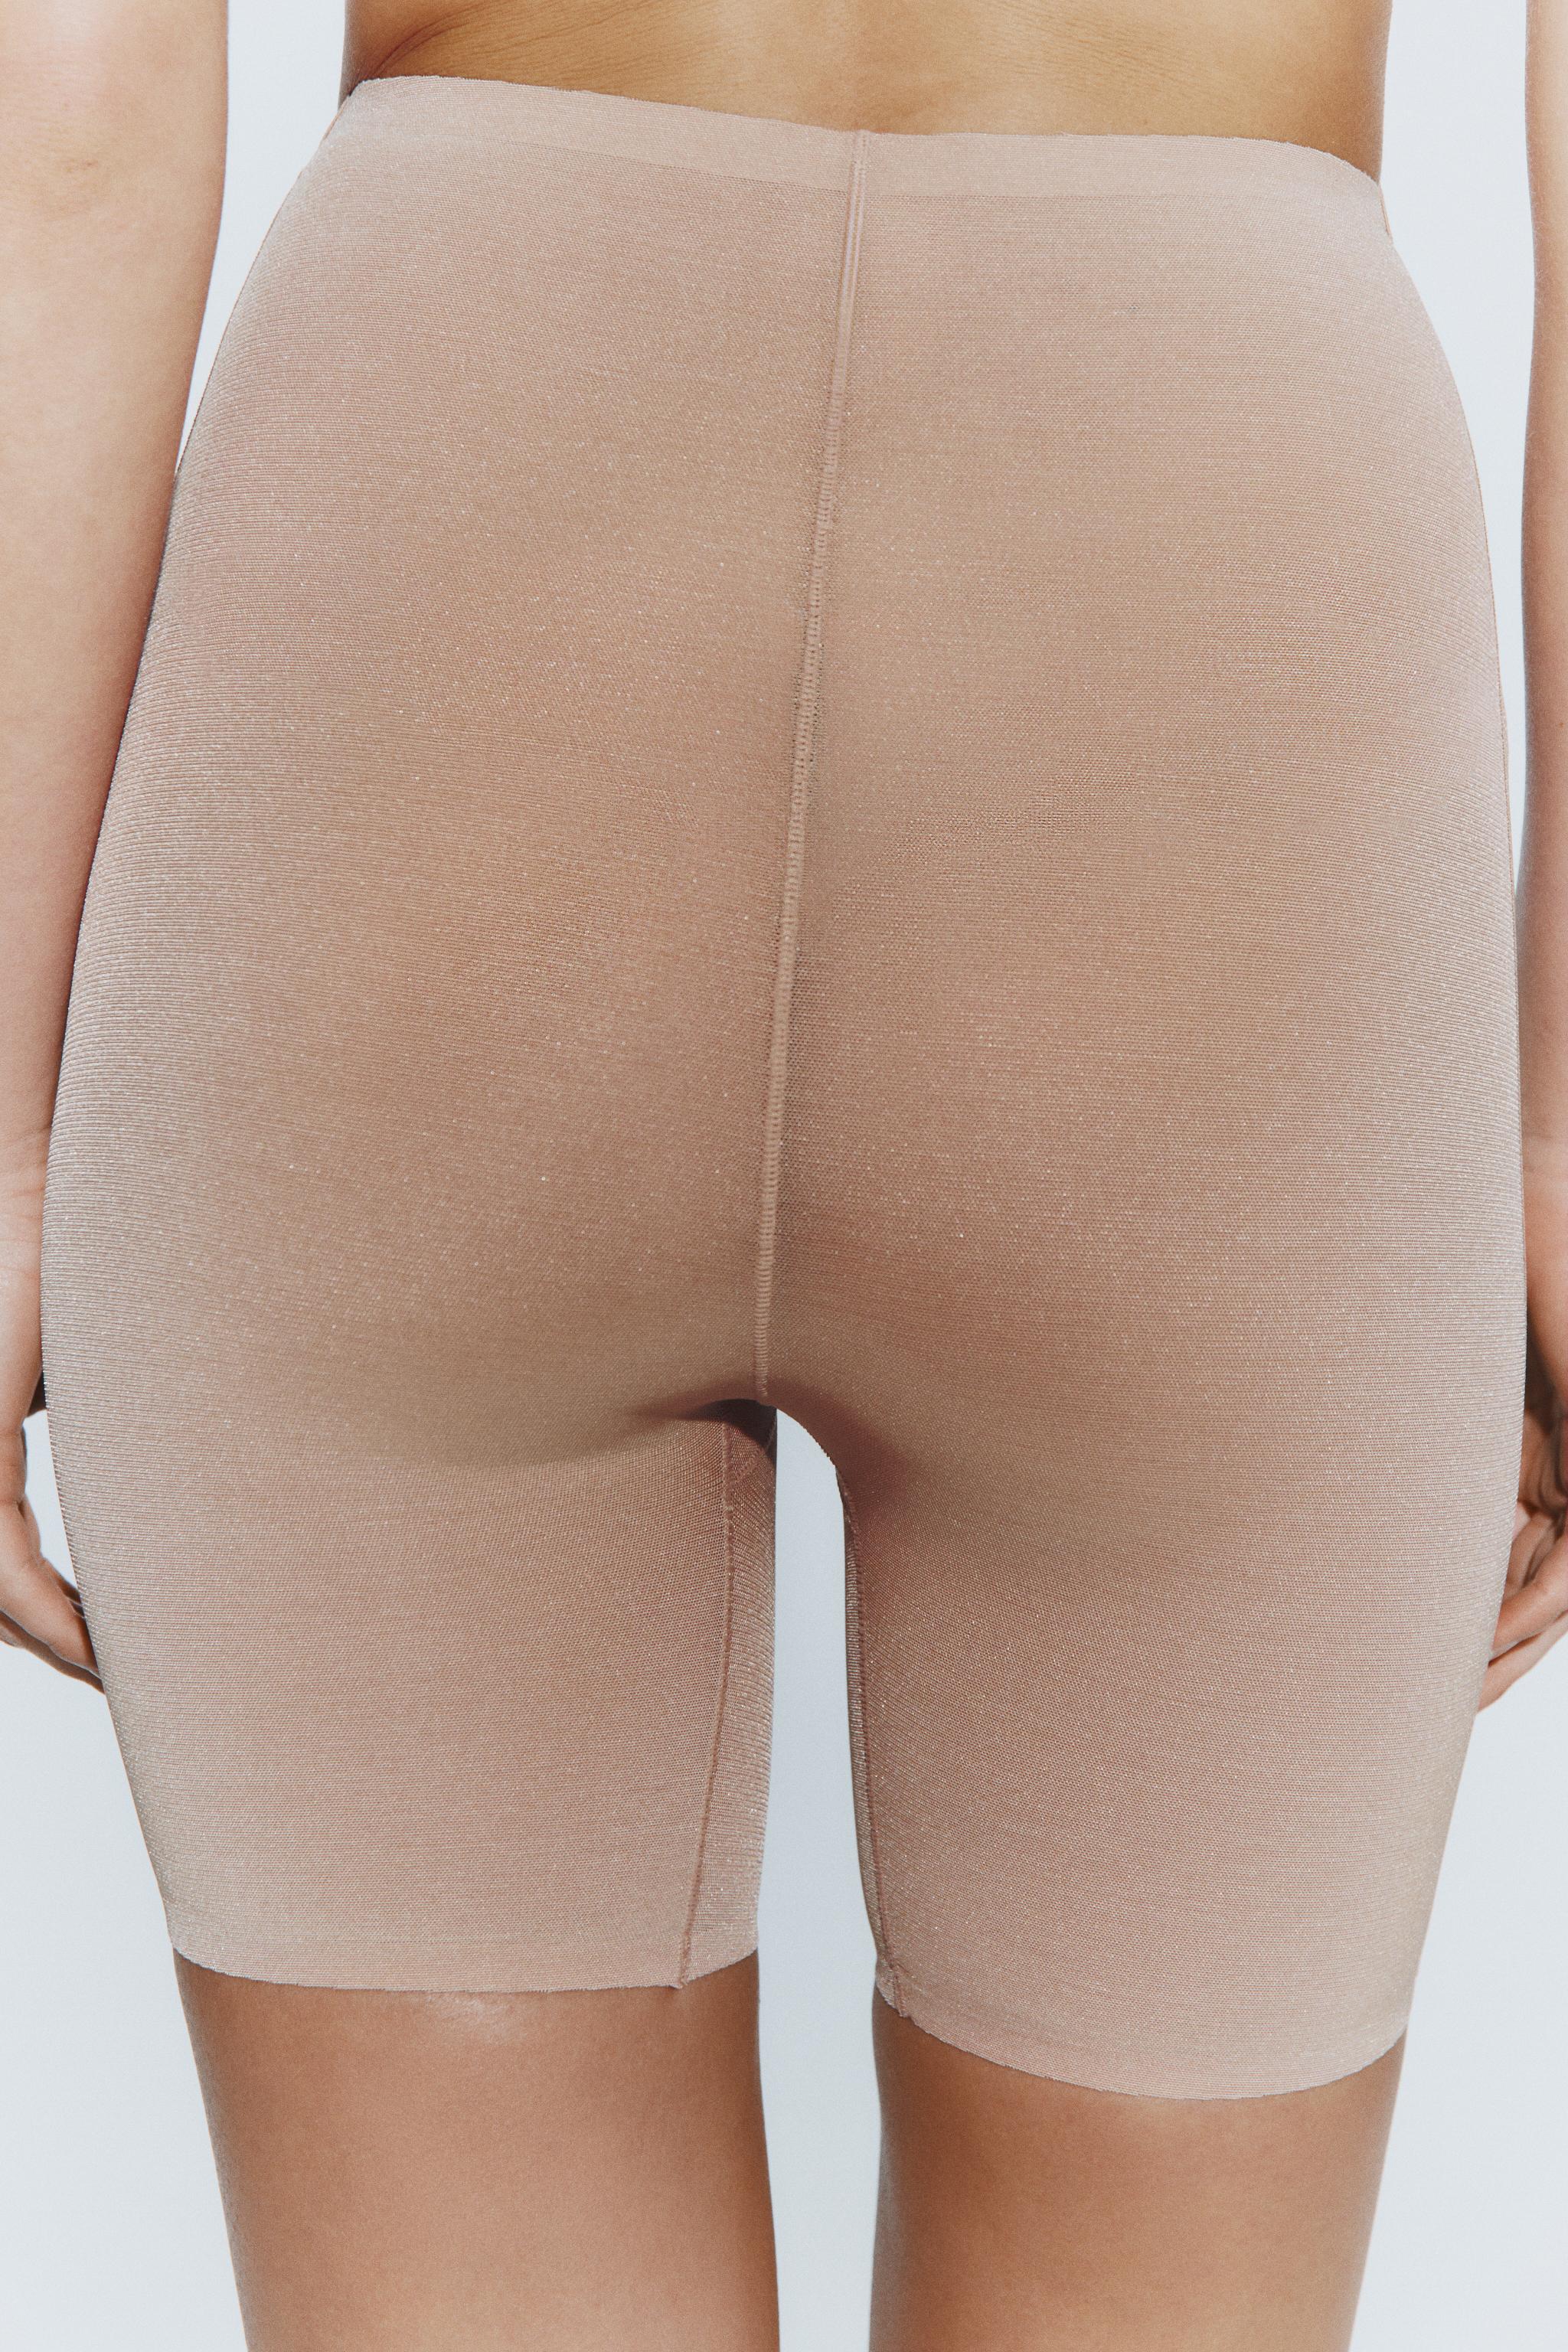 Cette Slimming Seamless Shaping Shorts (Hoseiree.com)